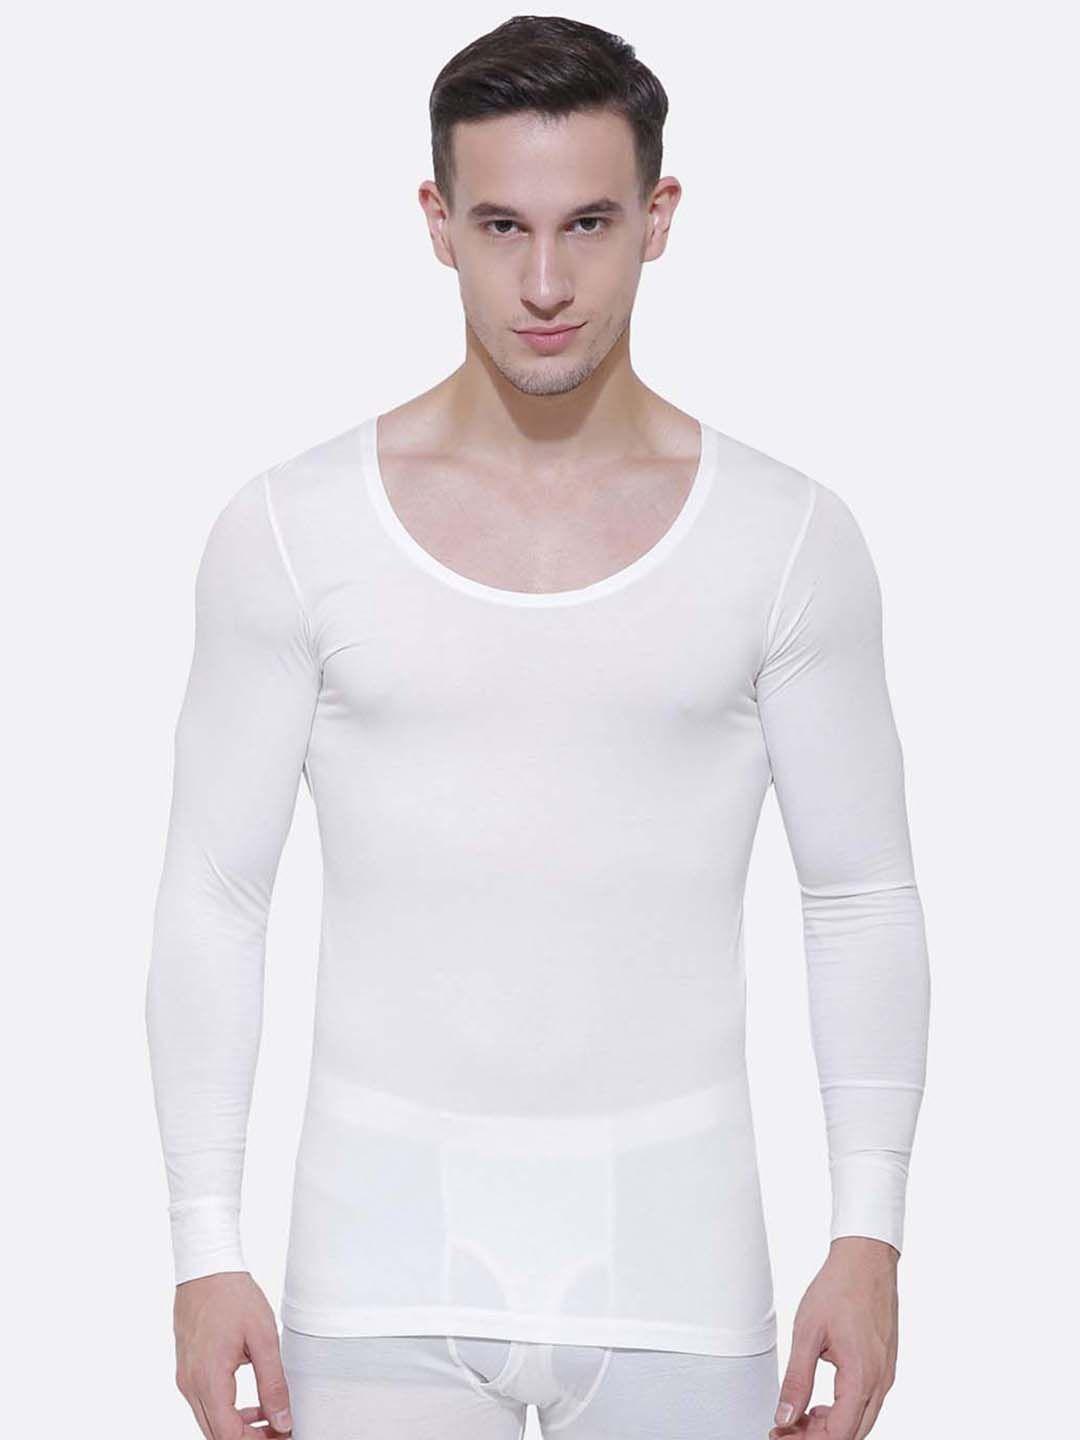 bodycare-insider-men-off-white-cotton-thermal-tops